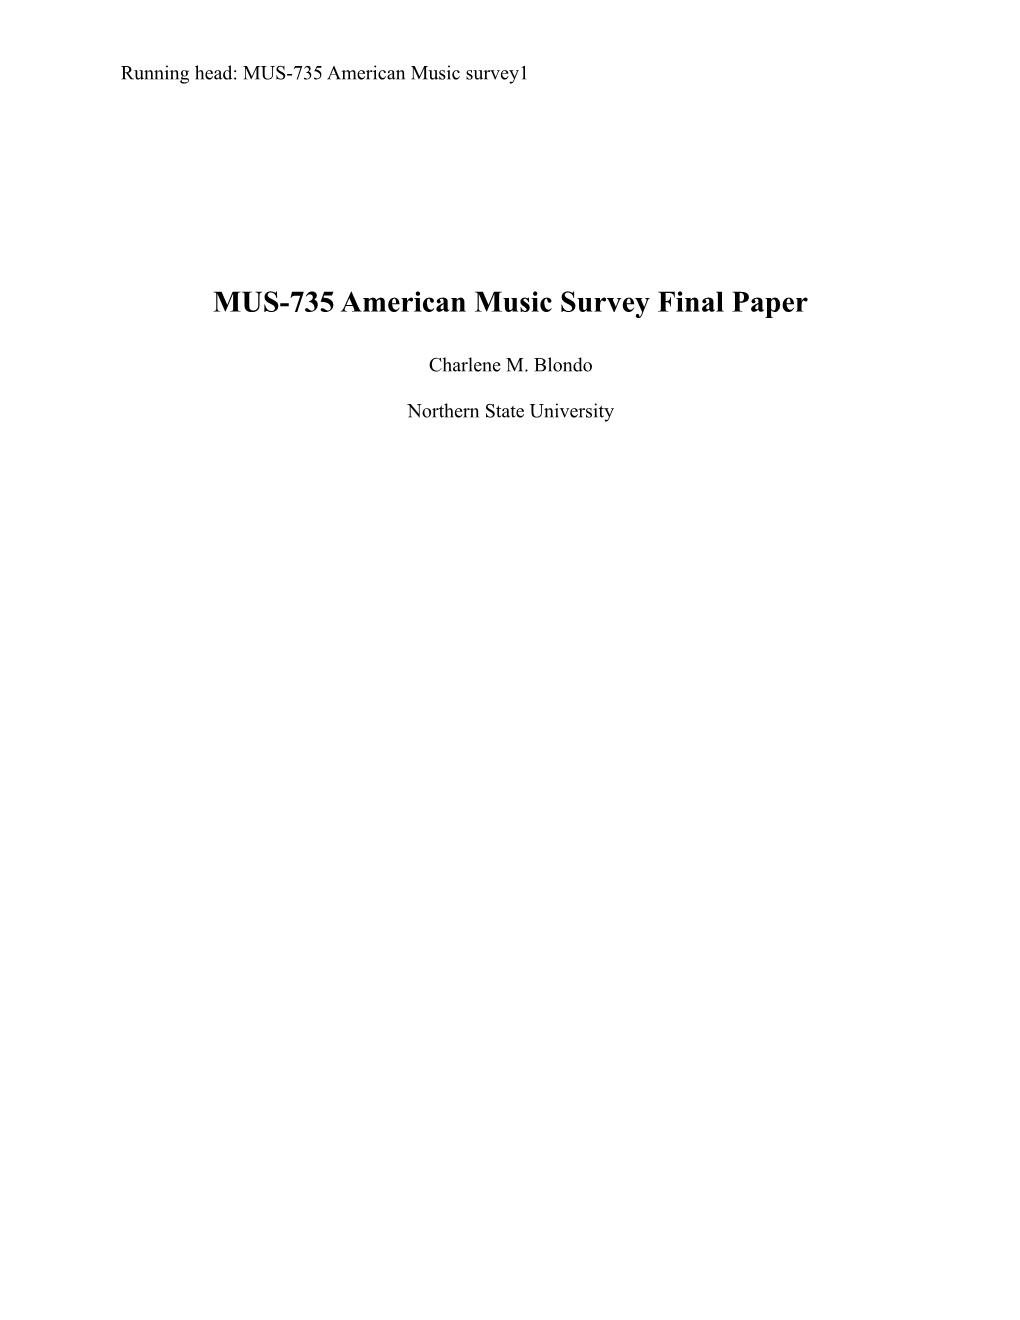 MUS-735 American Music Survey Final Paper